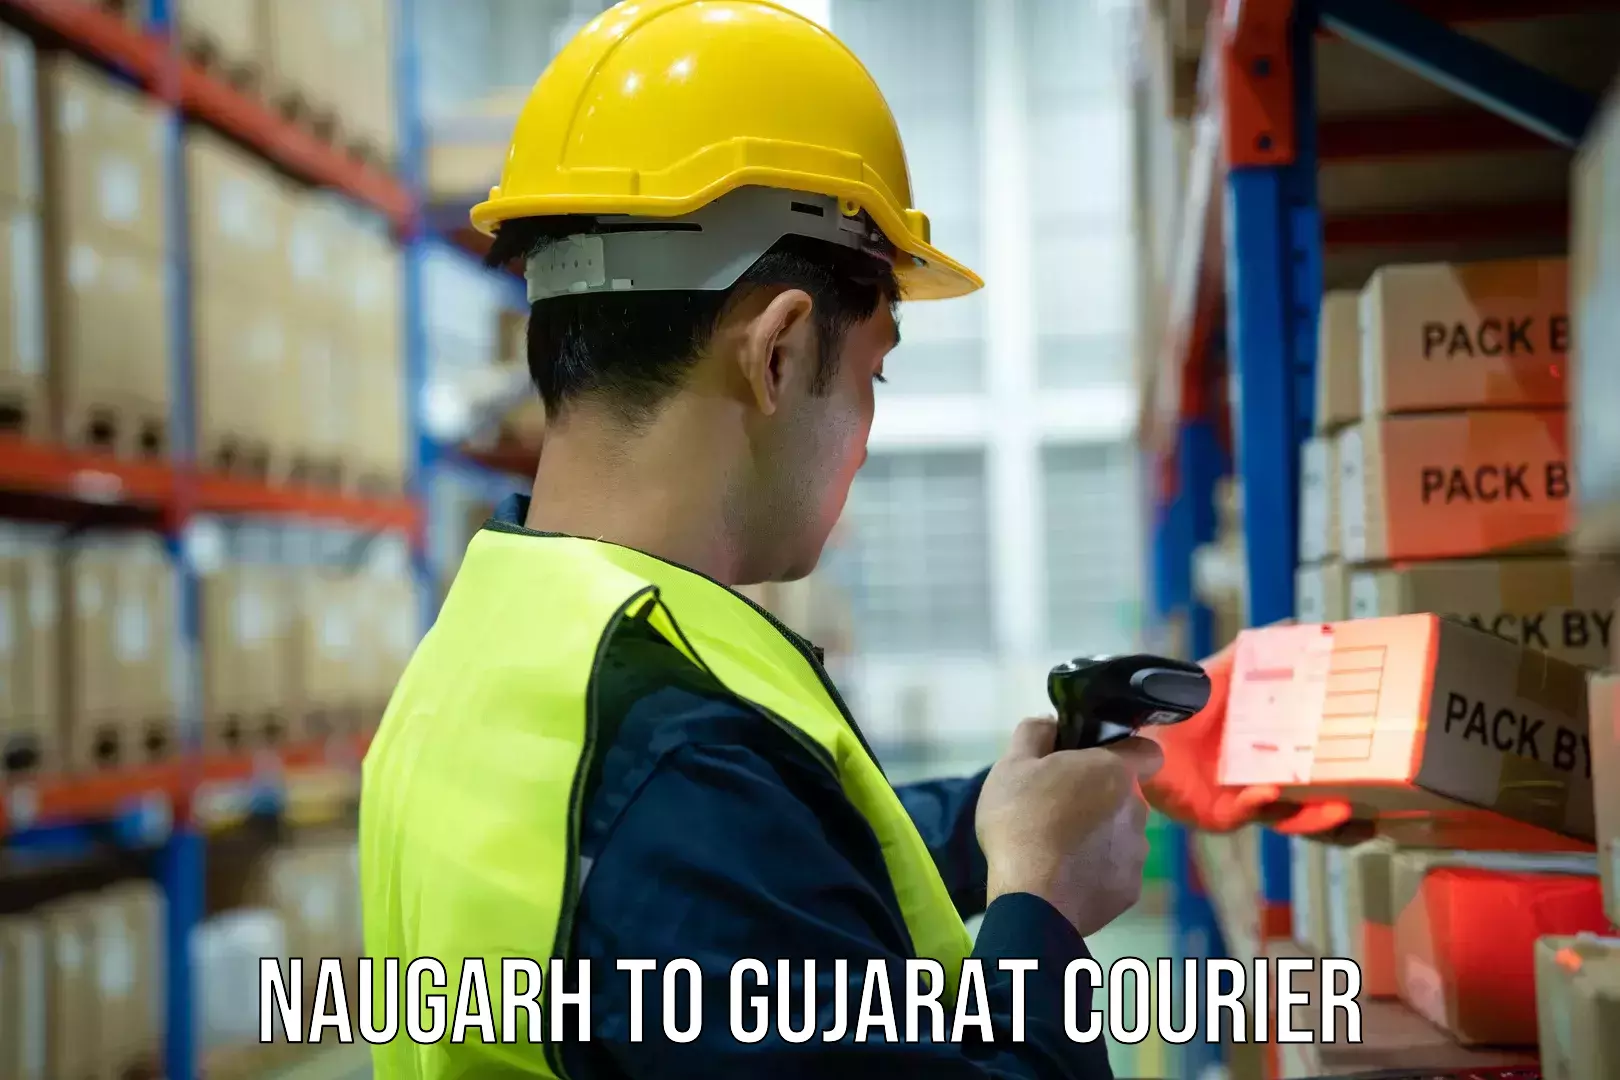 Courier service partnerships Naugarh to Gujarat